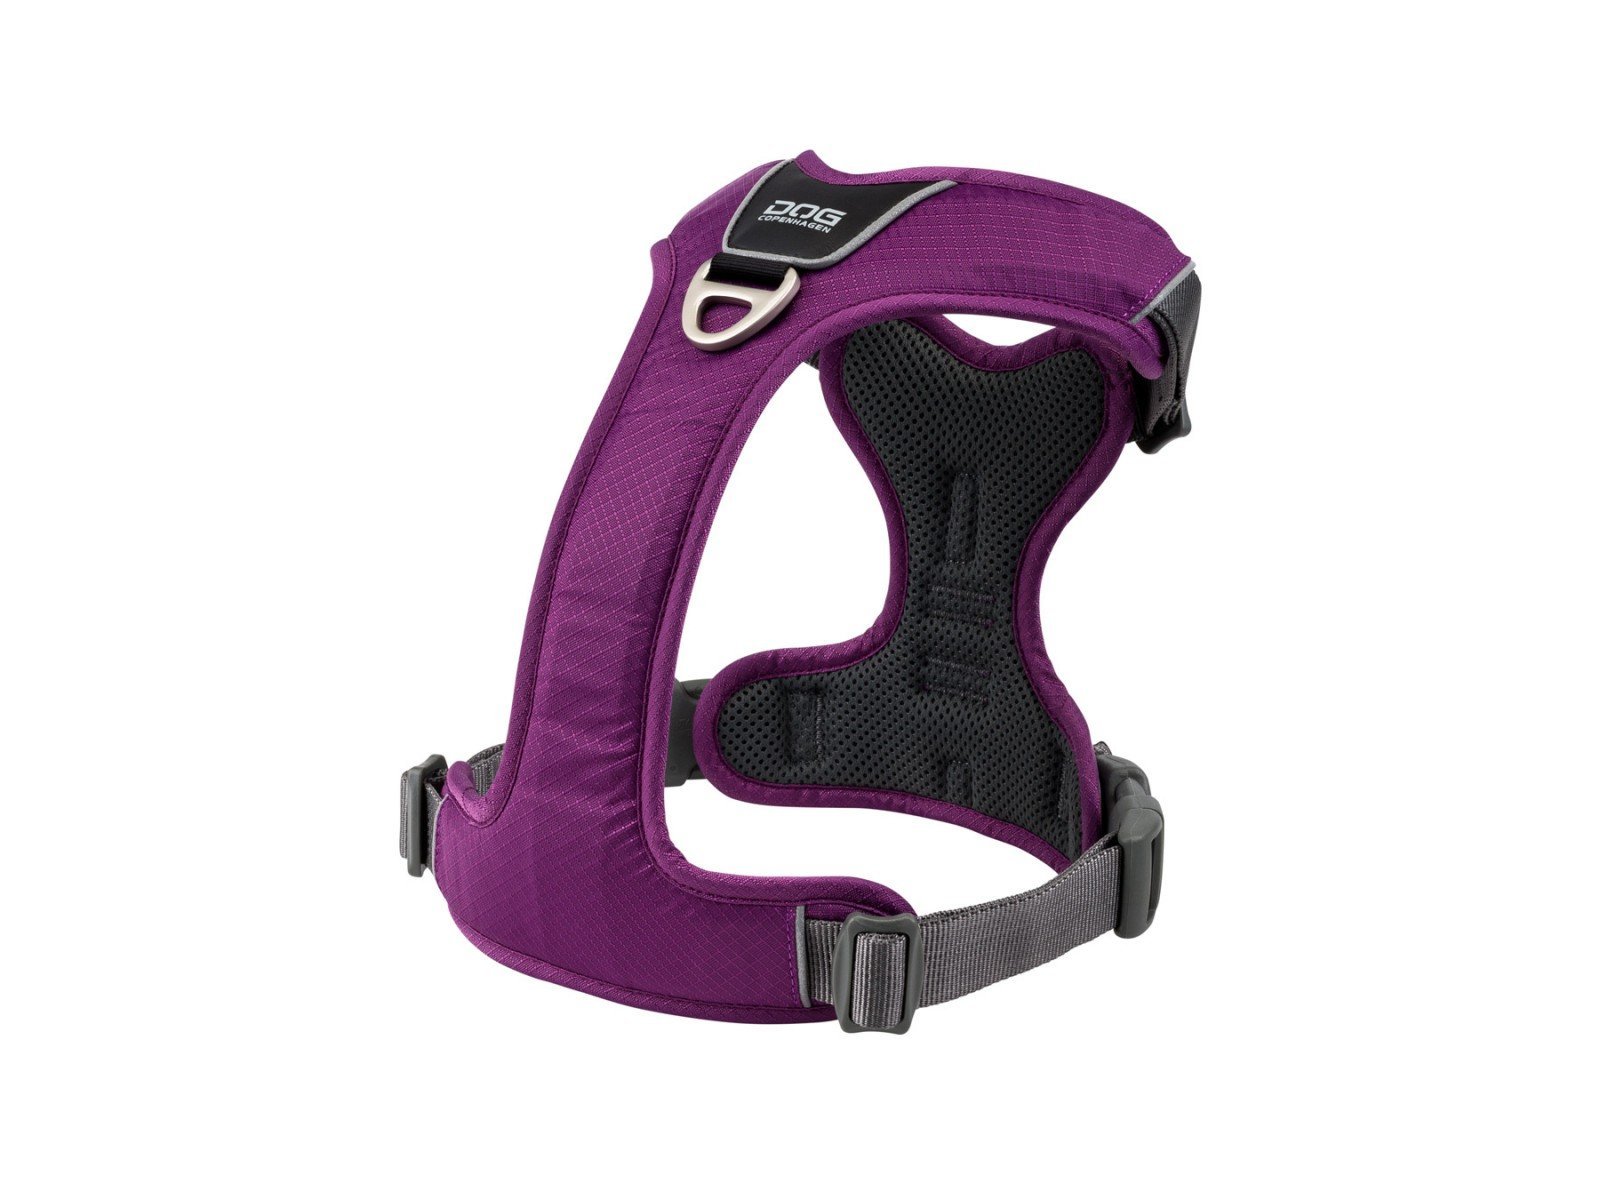 Dog Copenhagen - Comfort Walk Pro Harness - "Version" 2020 Purple Passion